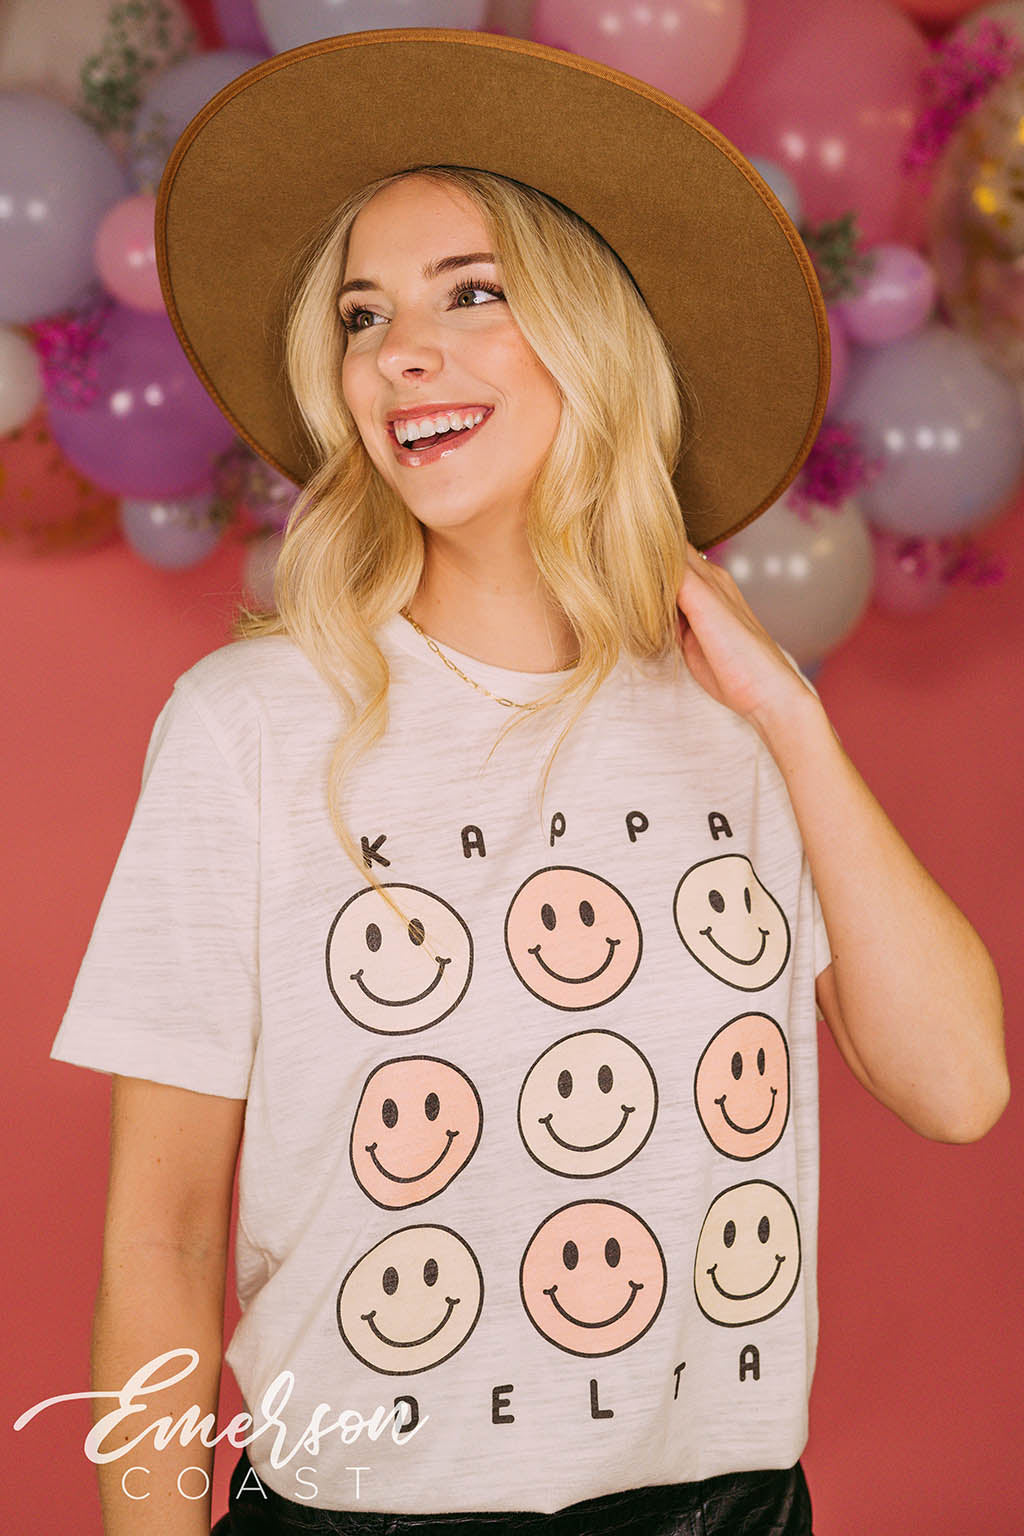 Kappa Delta Smiley Face PR Tee